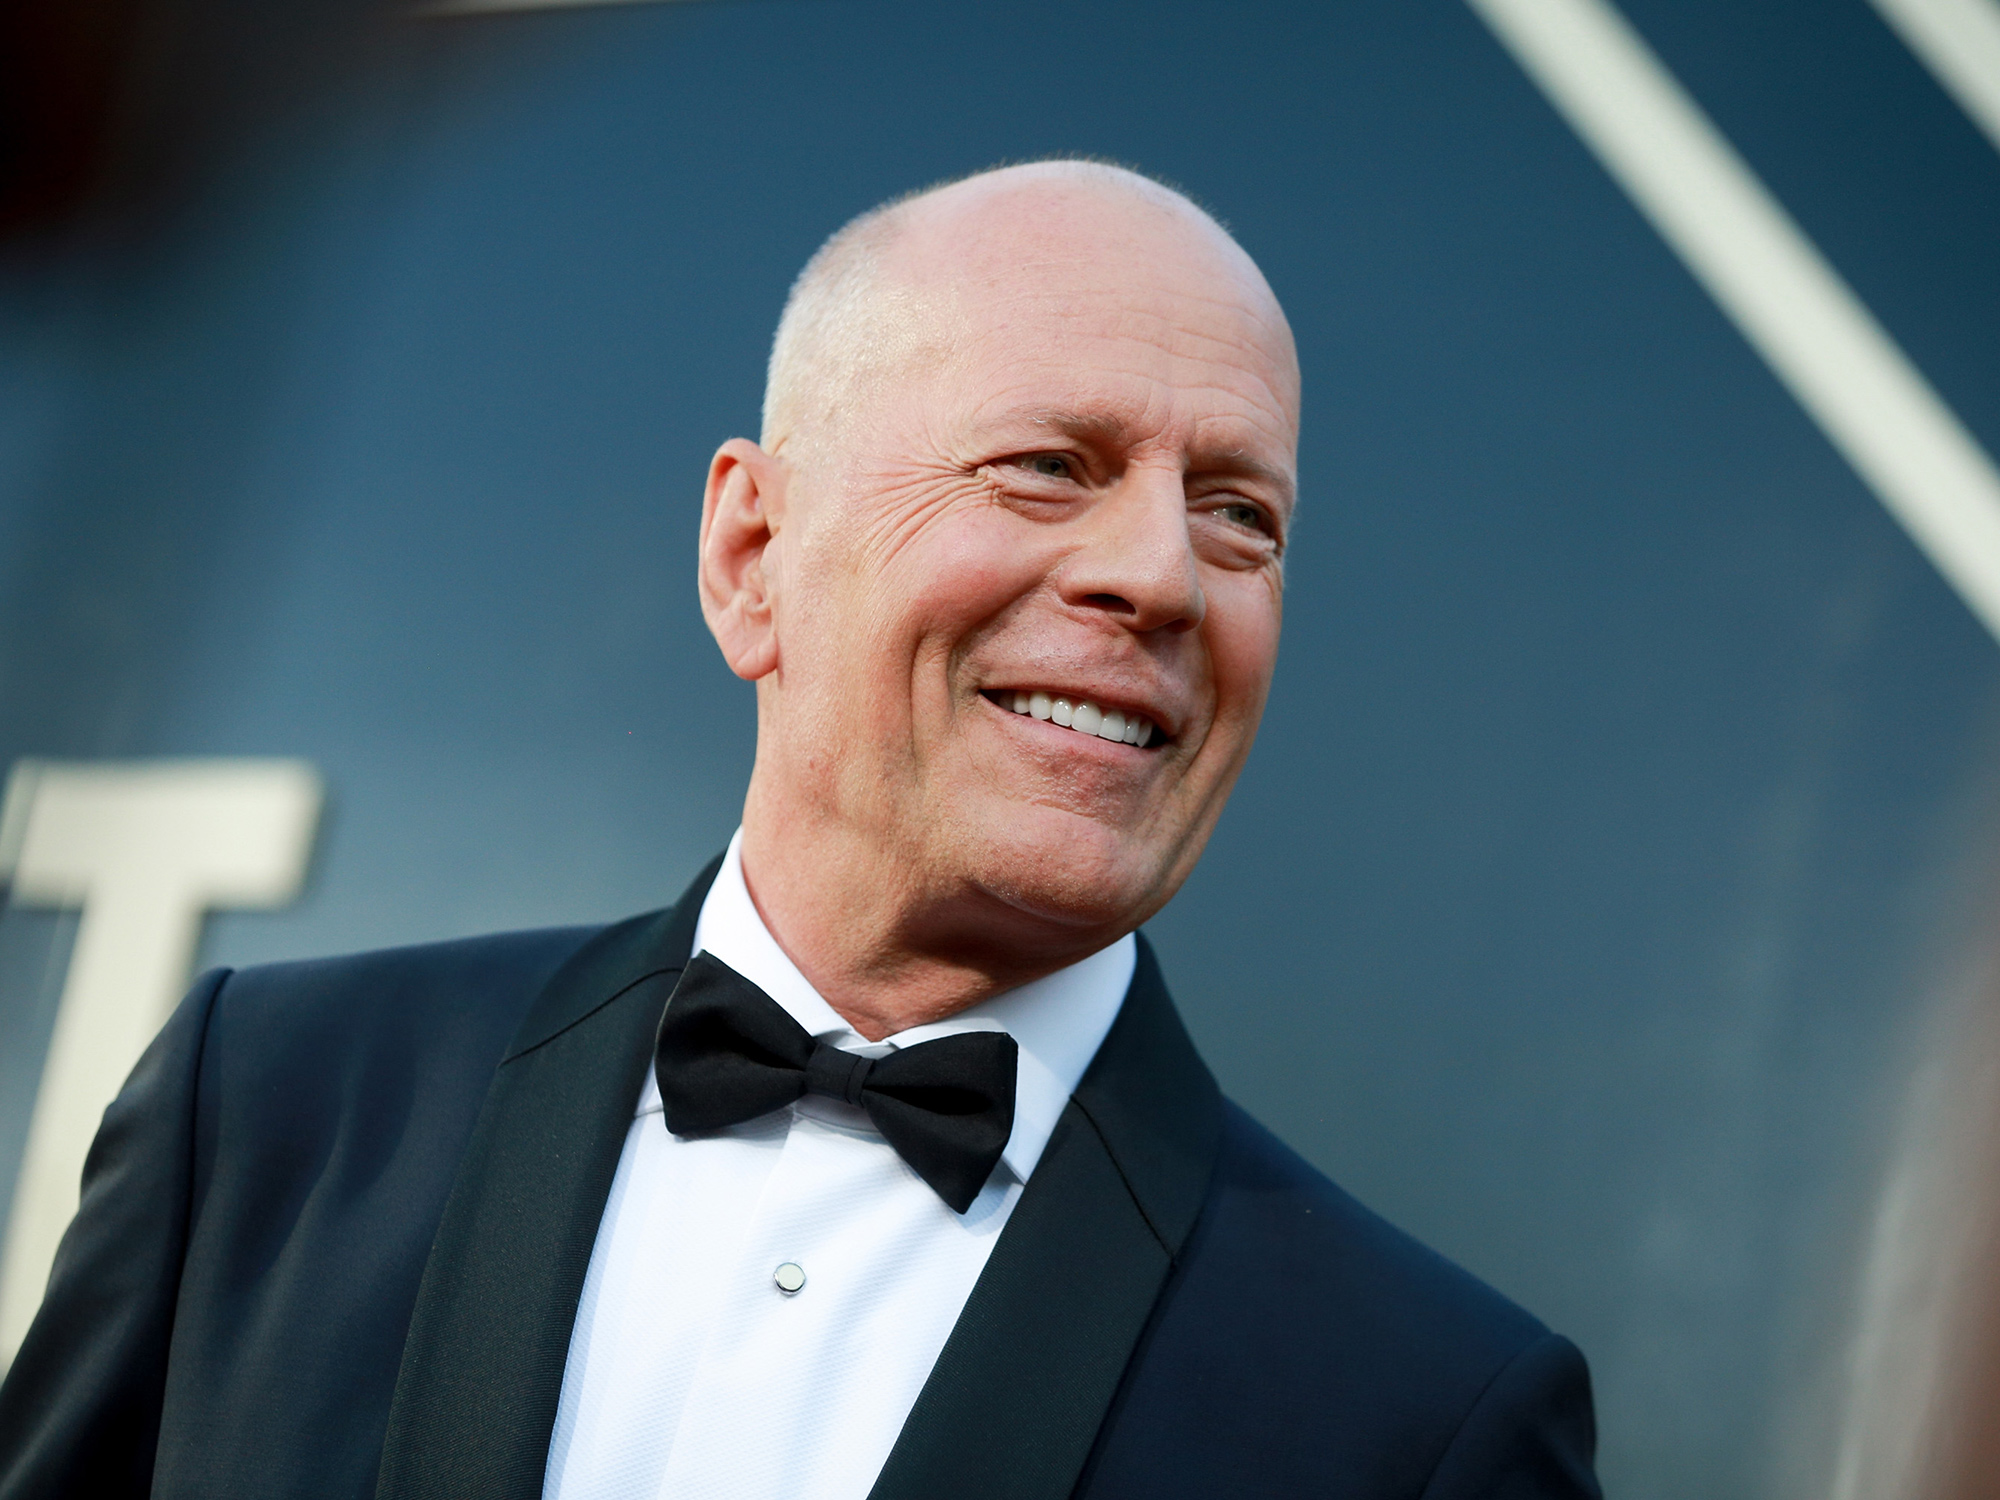 M. Night Shyamalan says Bruce Willis still hero after diagnosis